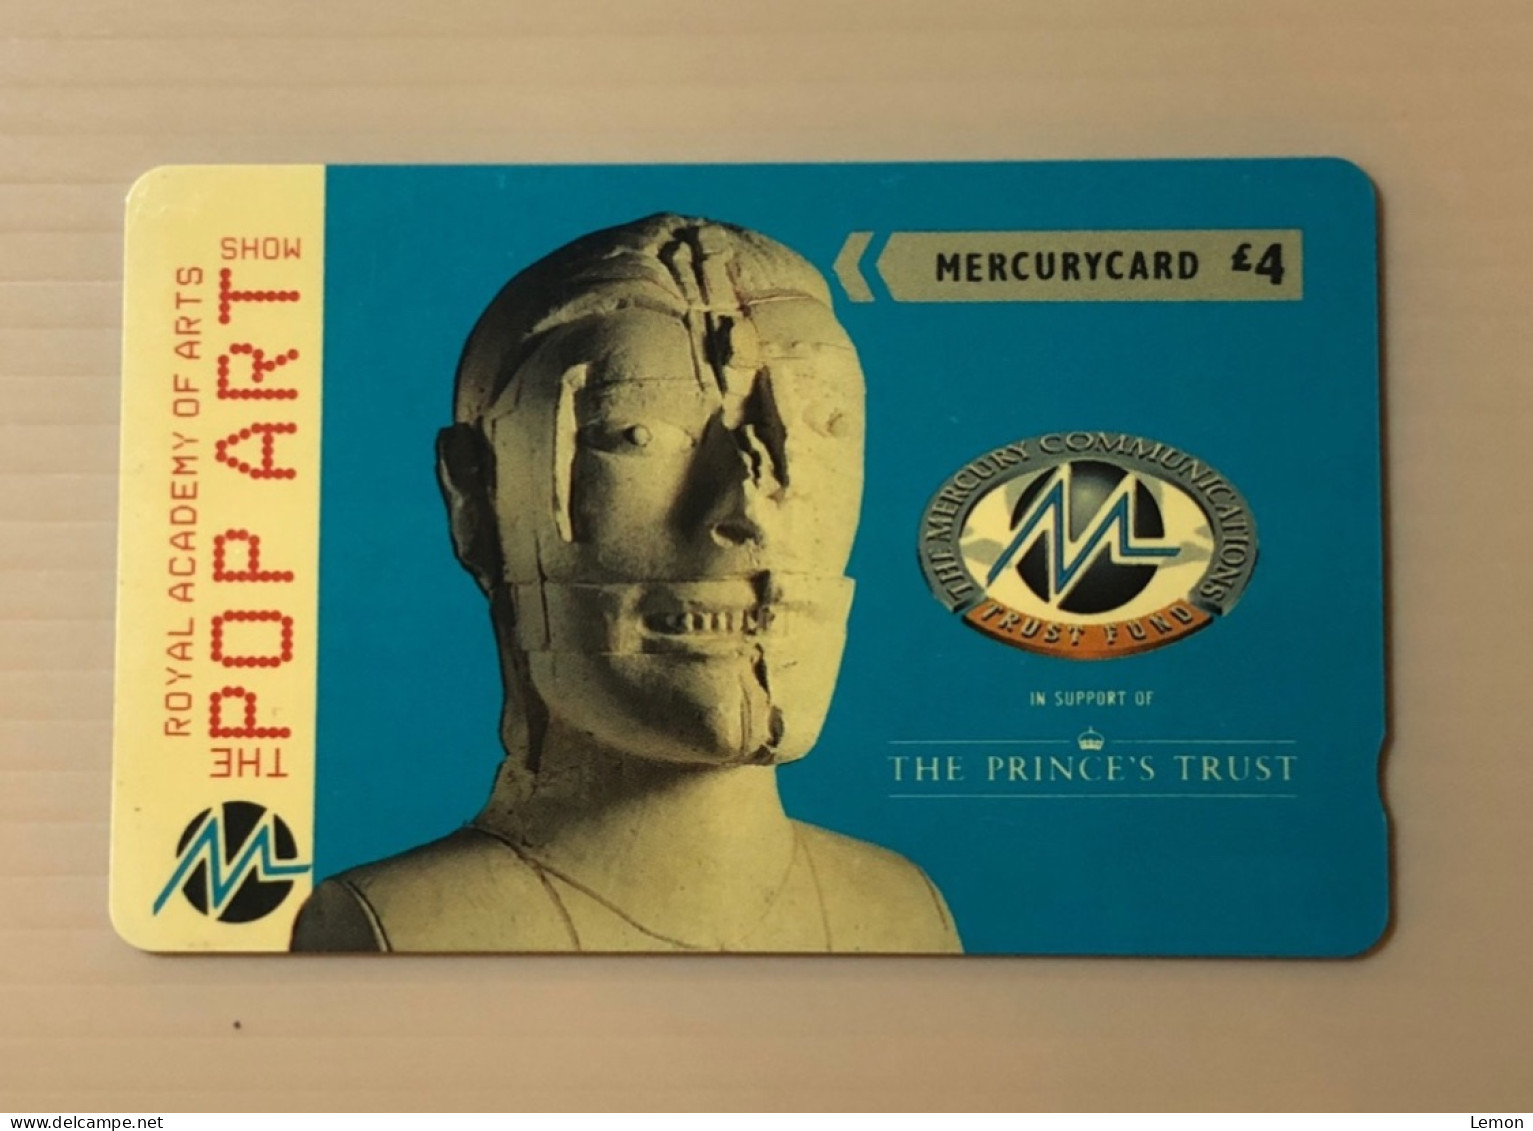 UK United Kingdom - British MercuryCard Mercury Magnetic GPT Phonecard - The Pop Art Show - Set Of 1 Used Card - Mercury Communications & Paytelco